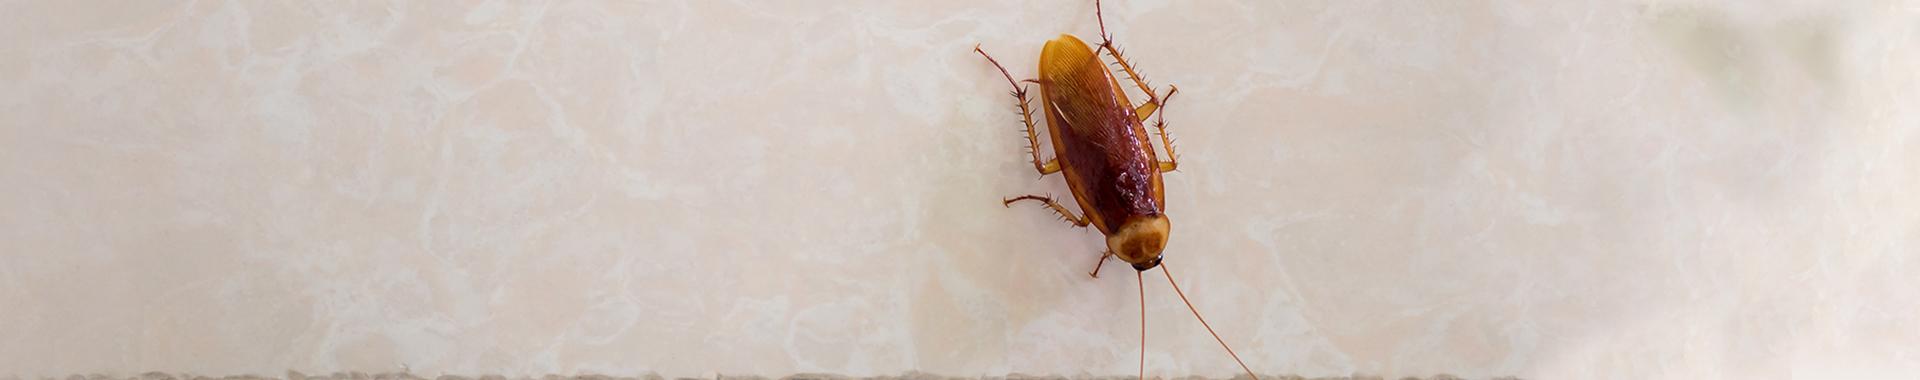 cockroach in beaumont texas